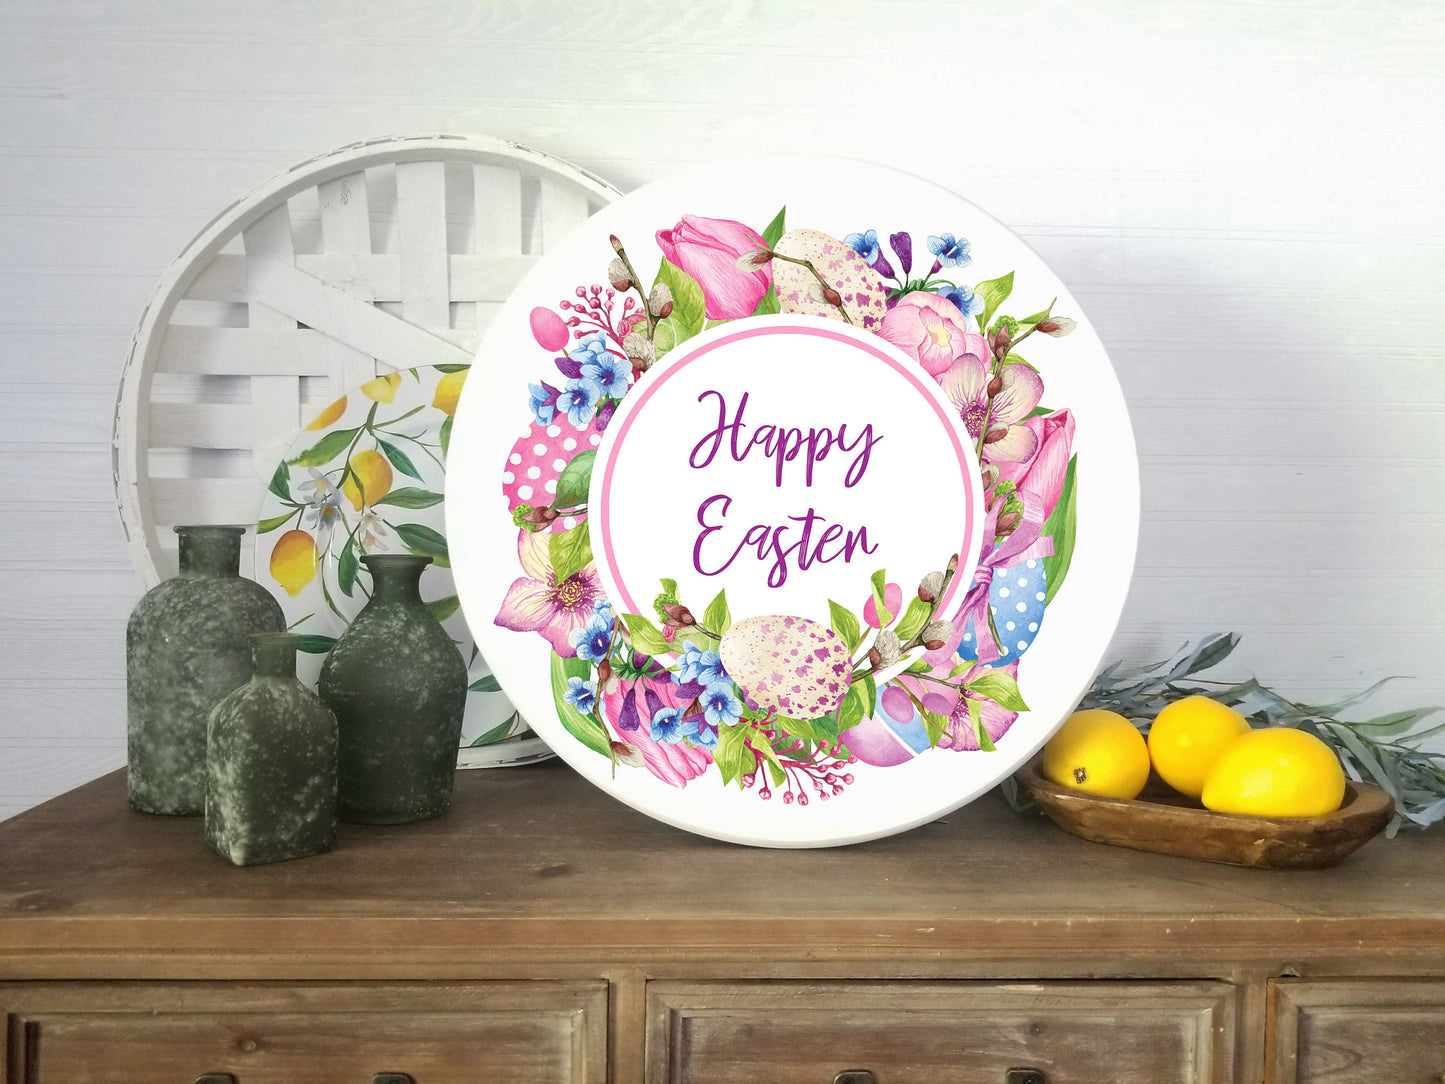 Happy Easter Floral Wreath Round Printed Handmade Wood Sign Door Hanger